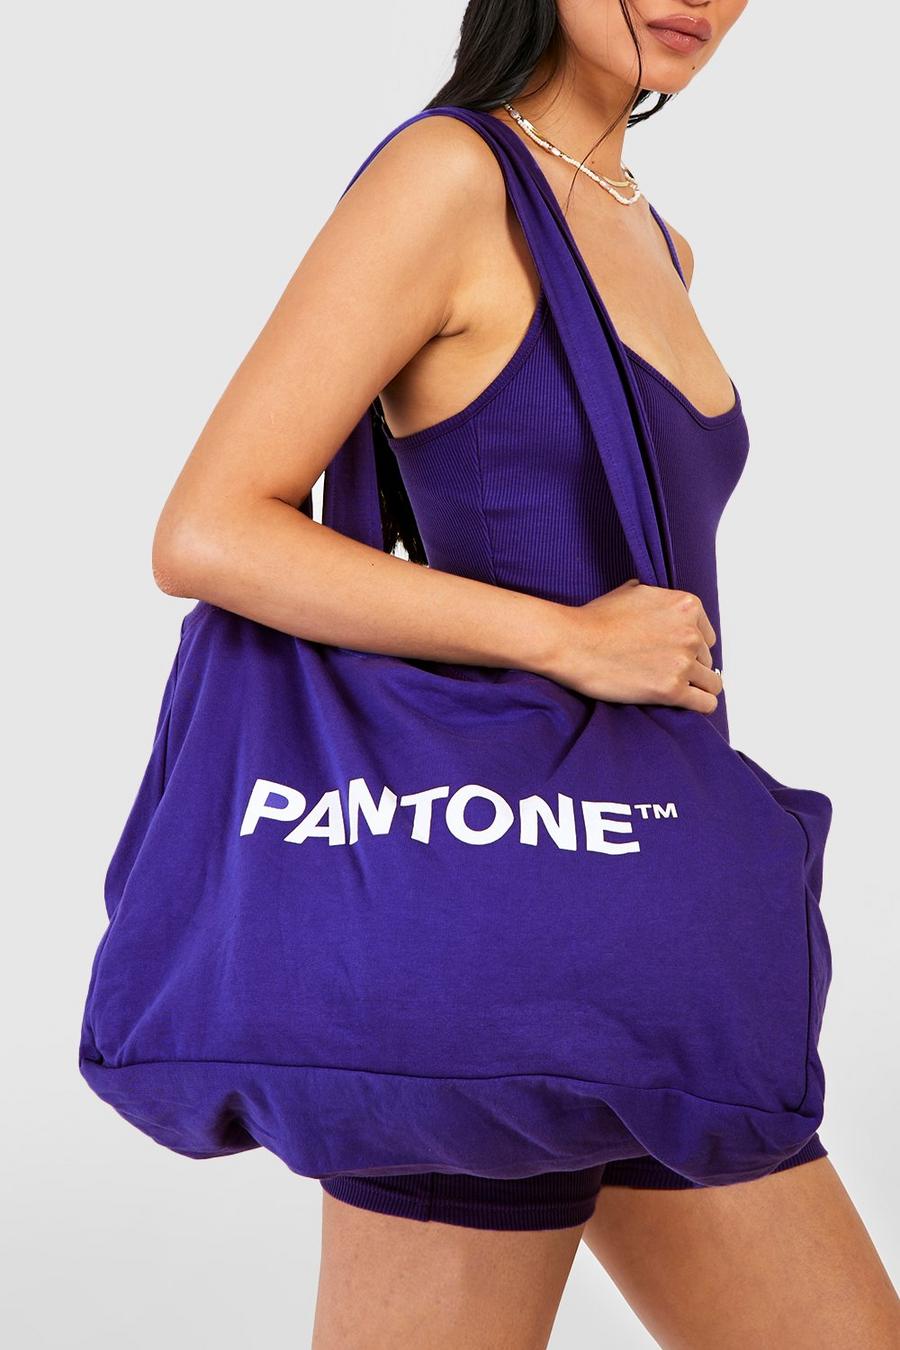 Pantone Shopper-Tragetasche, Purple